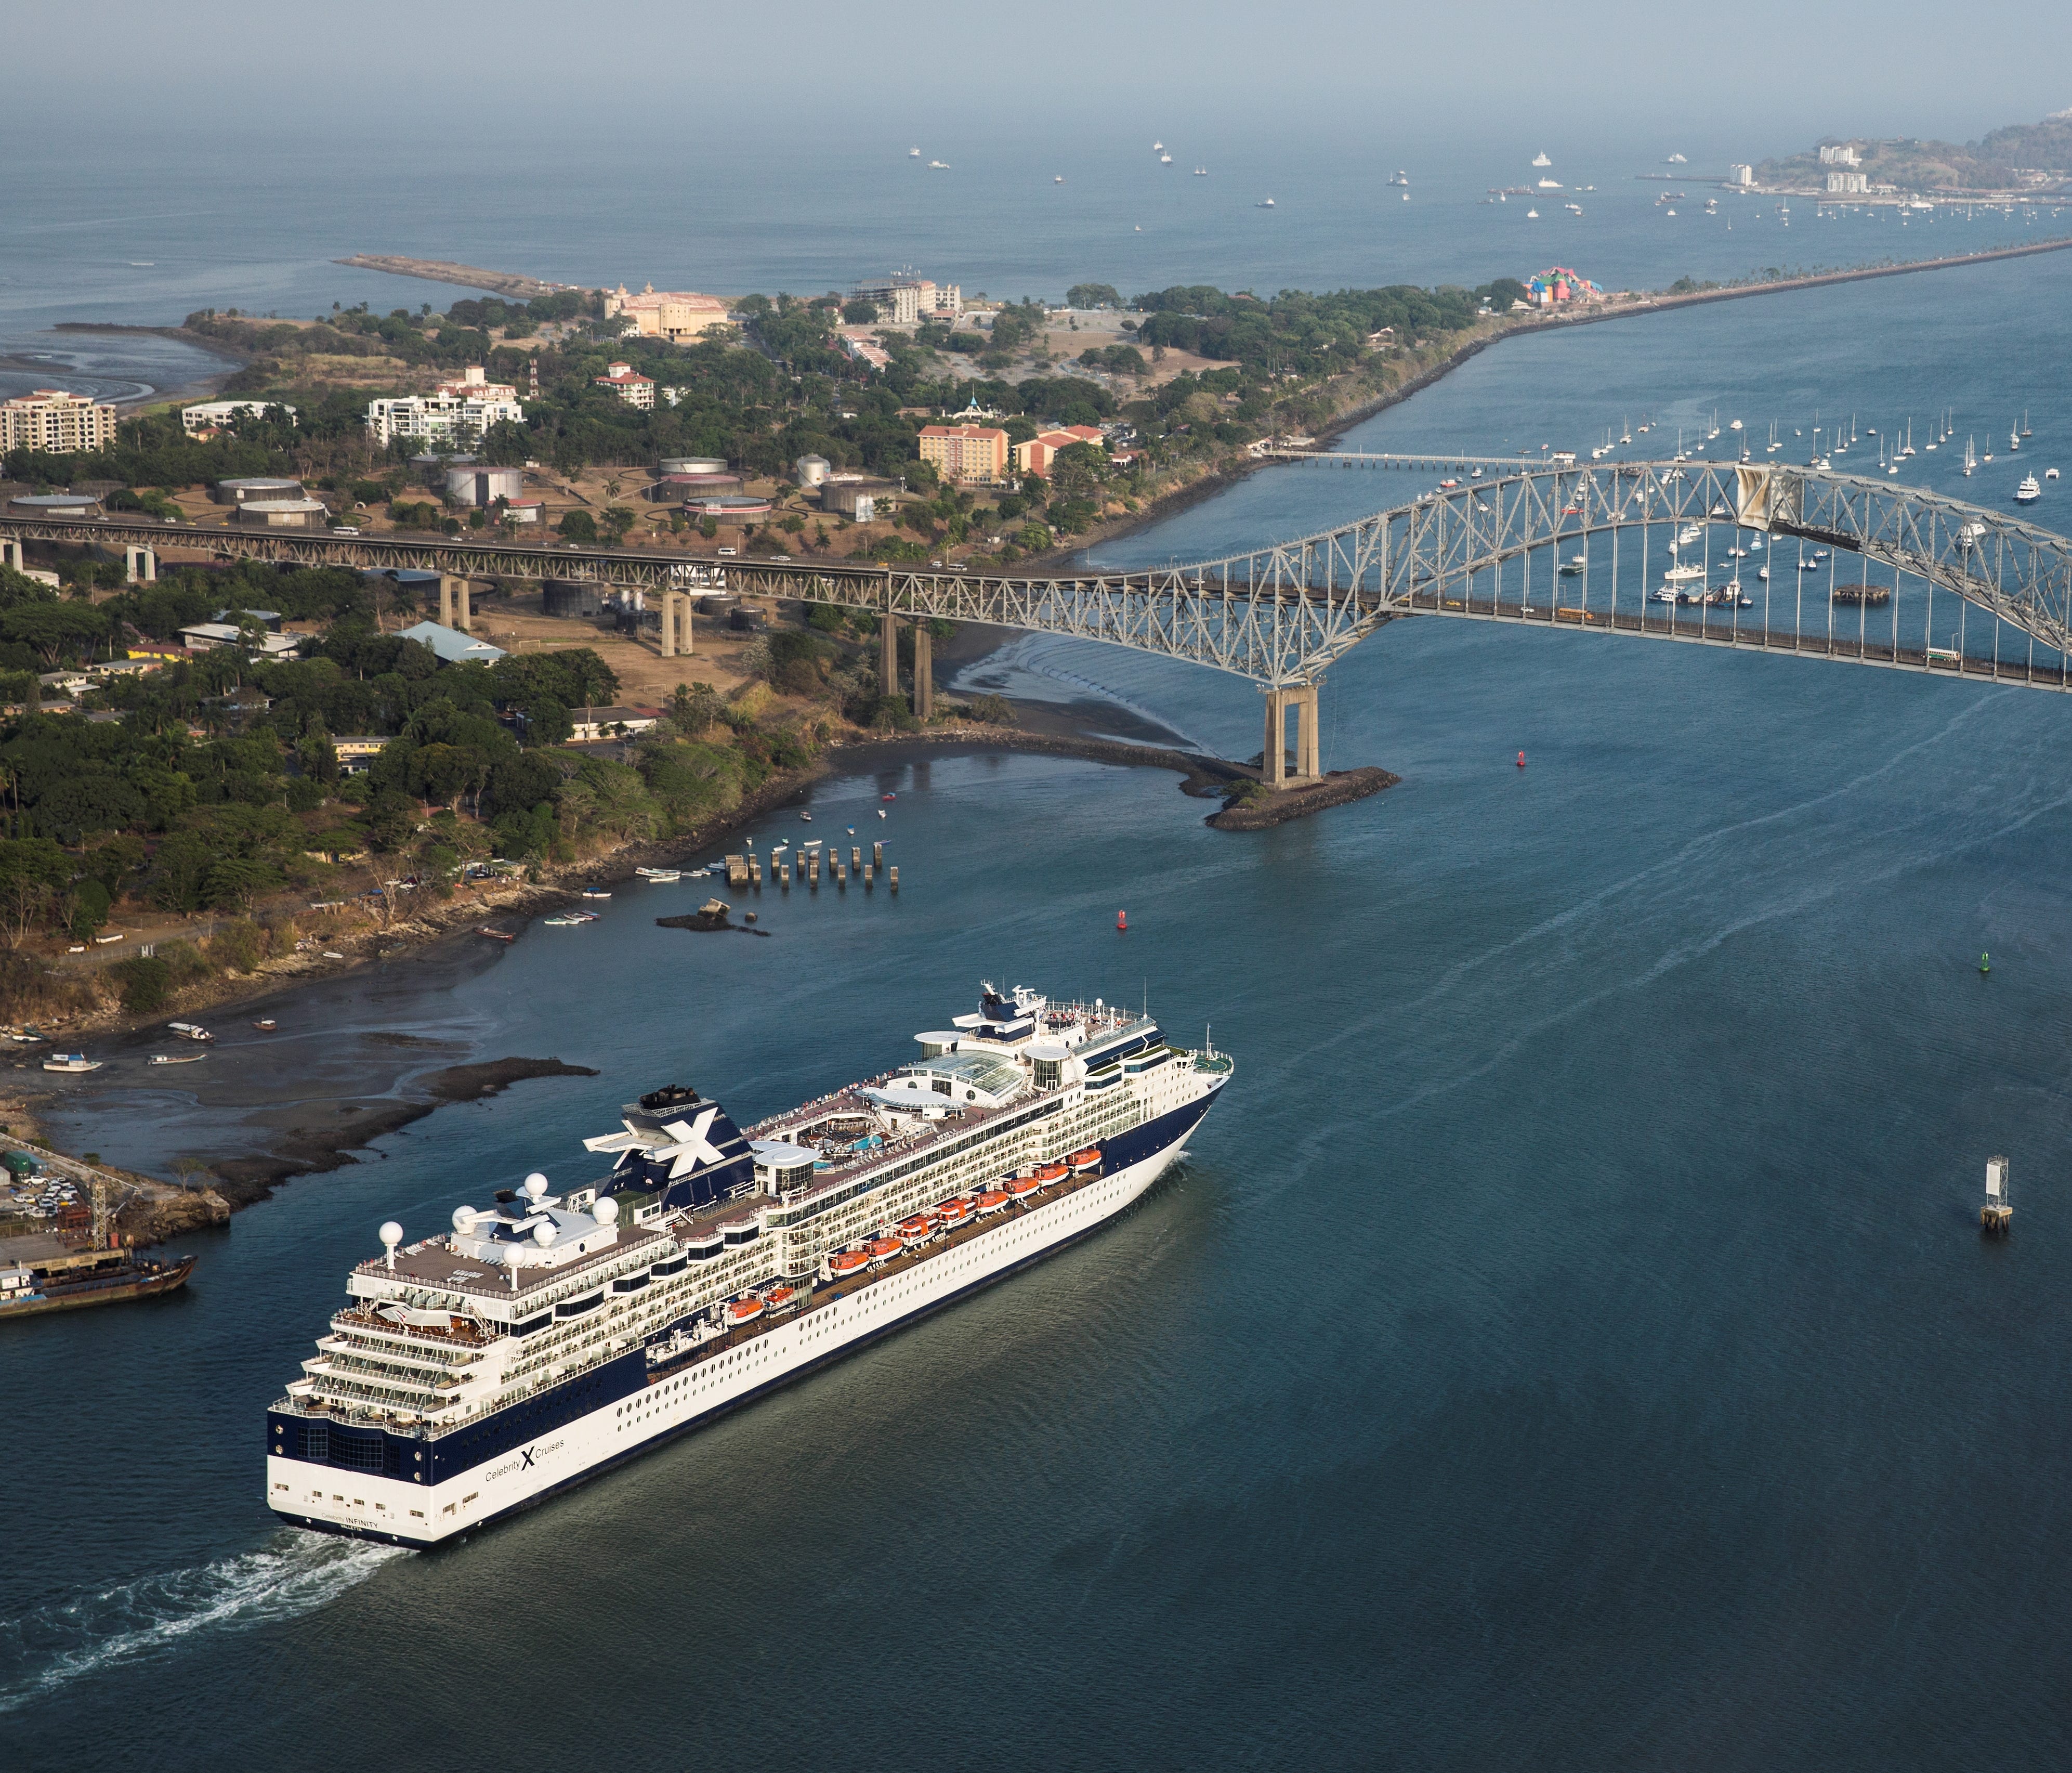 Want to cruise through the new Panama Canal locks? Here's how | ksdk.com